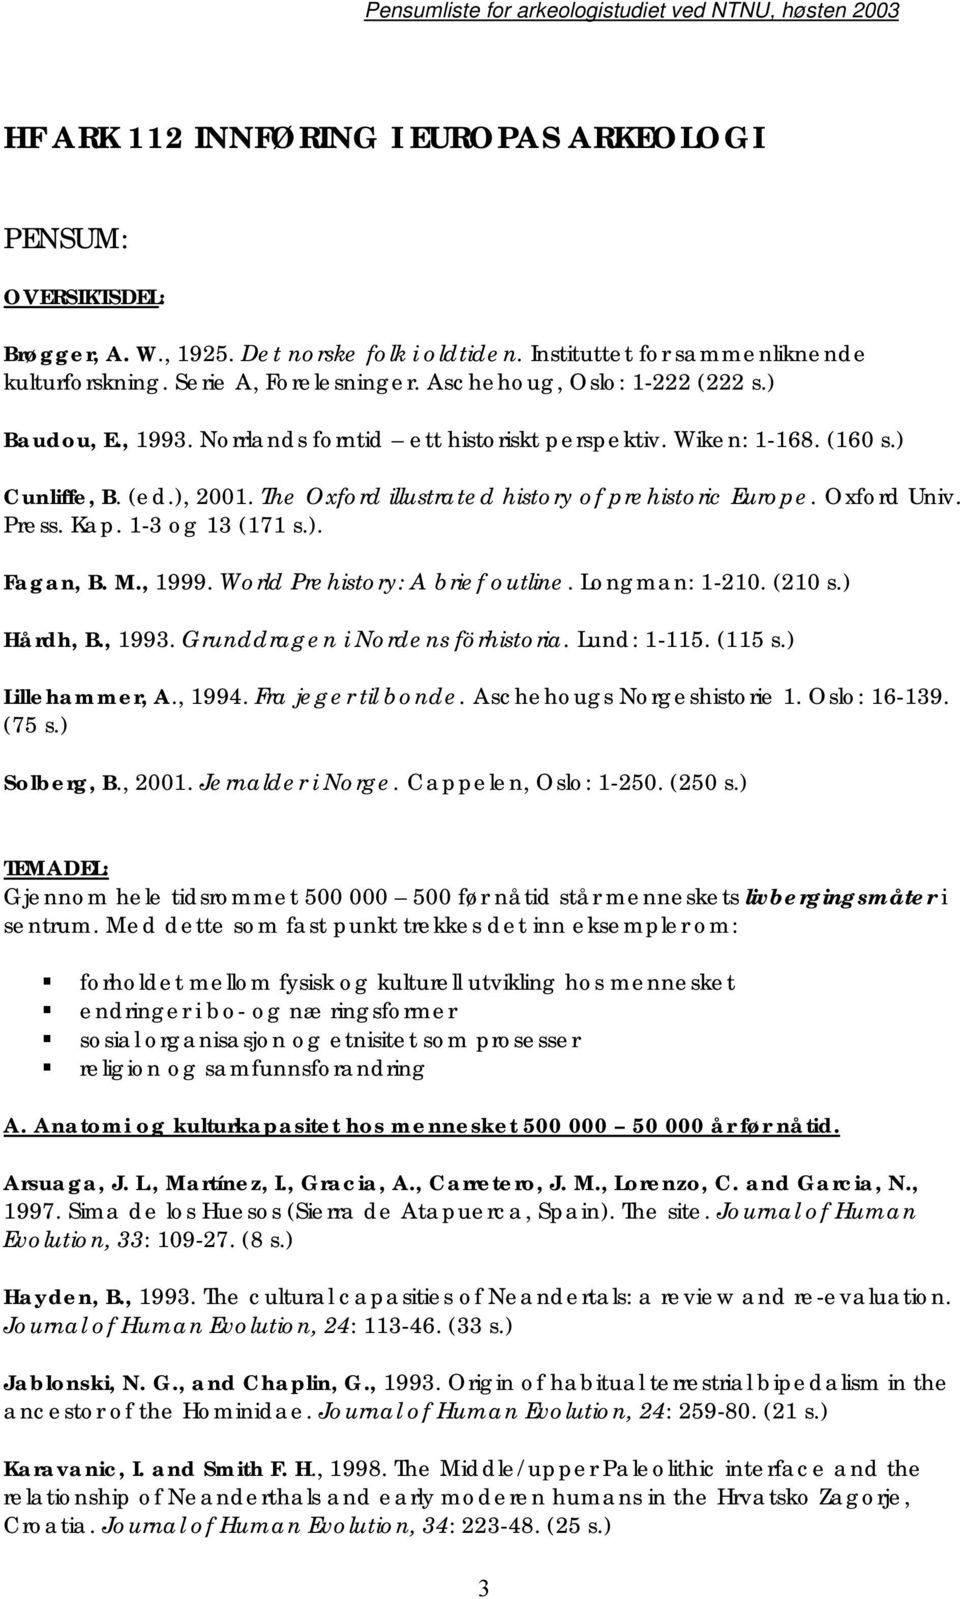 Oxford Univ. Press. Kap. 1-3 og 13 (171 s.). Fagan, B. M., 1999. World Prehistory: A brief outline. Longman: 1-210. (210 s.) Hårdh, B., 1993. Grunddragen i Nordens förhistoria. Lund: 1-115. (115 s.